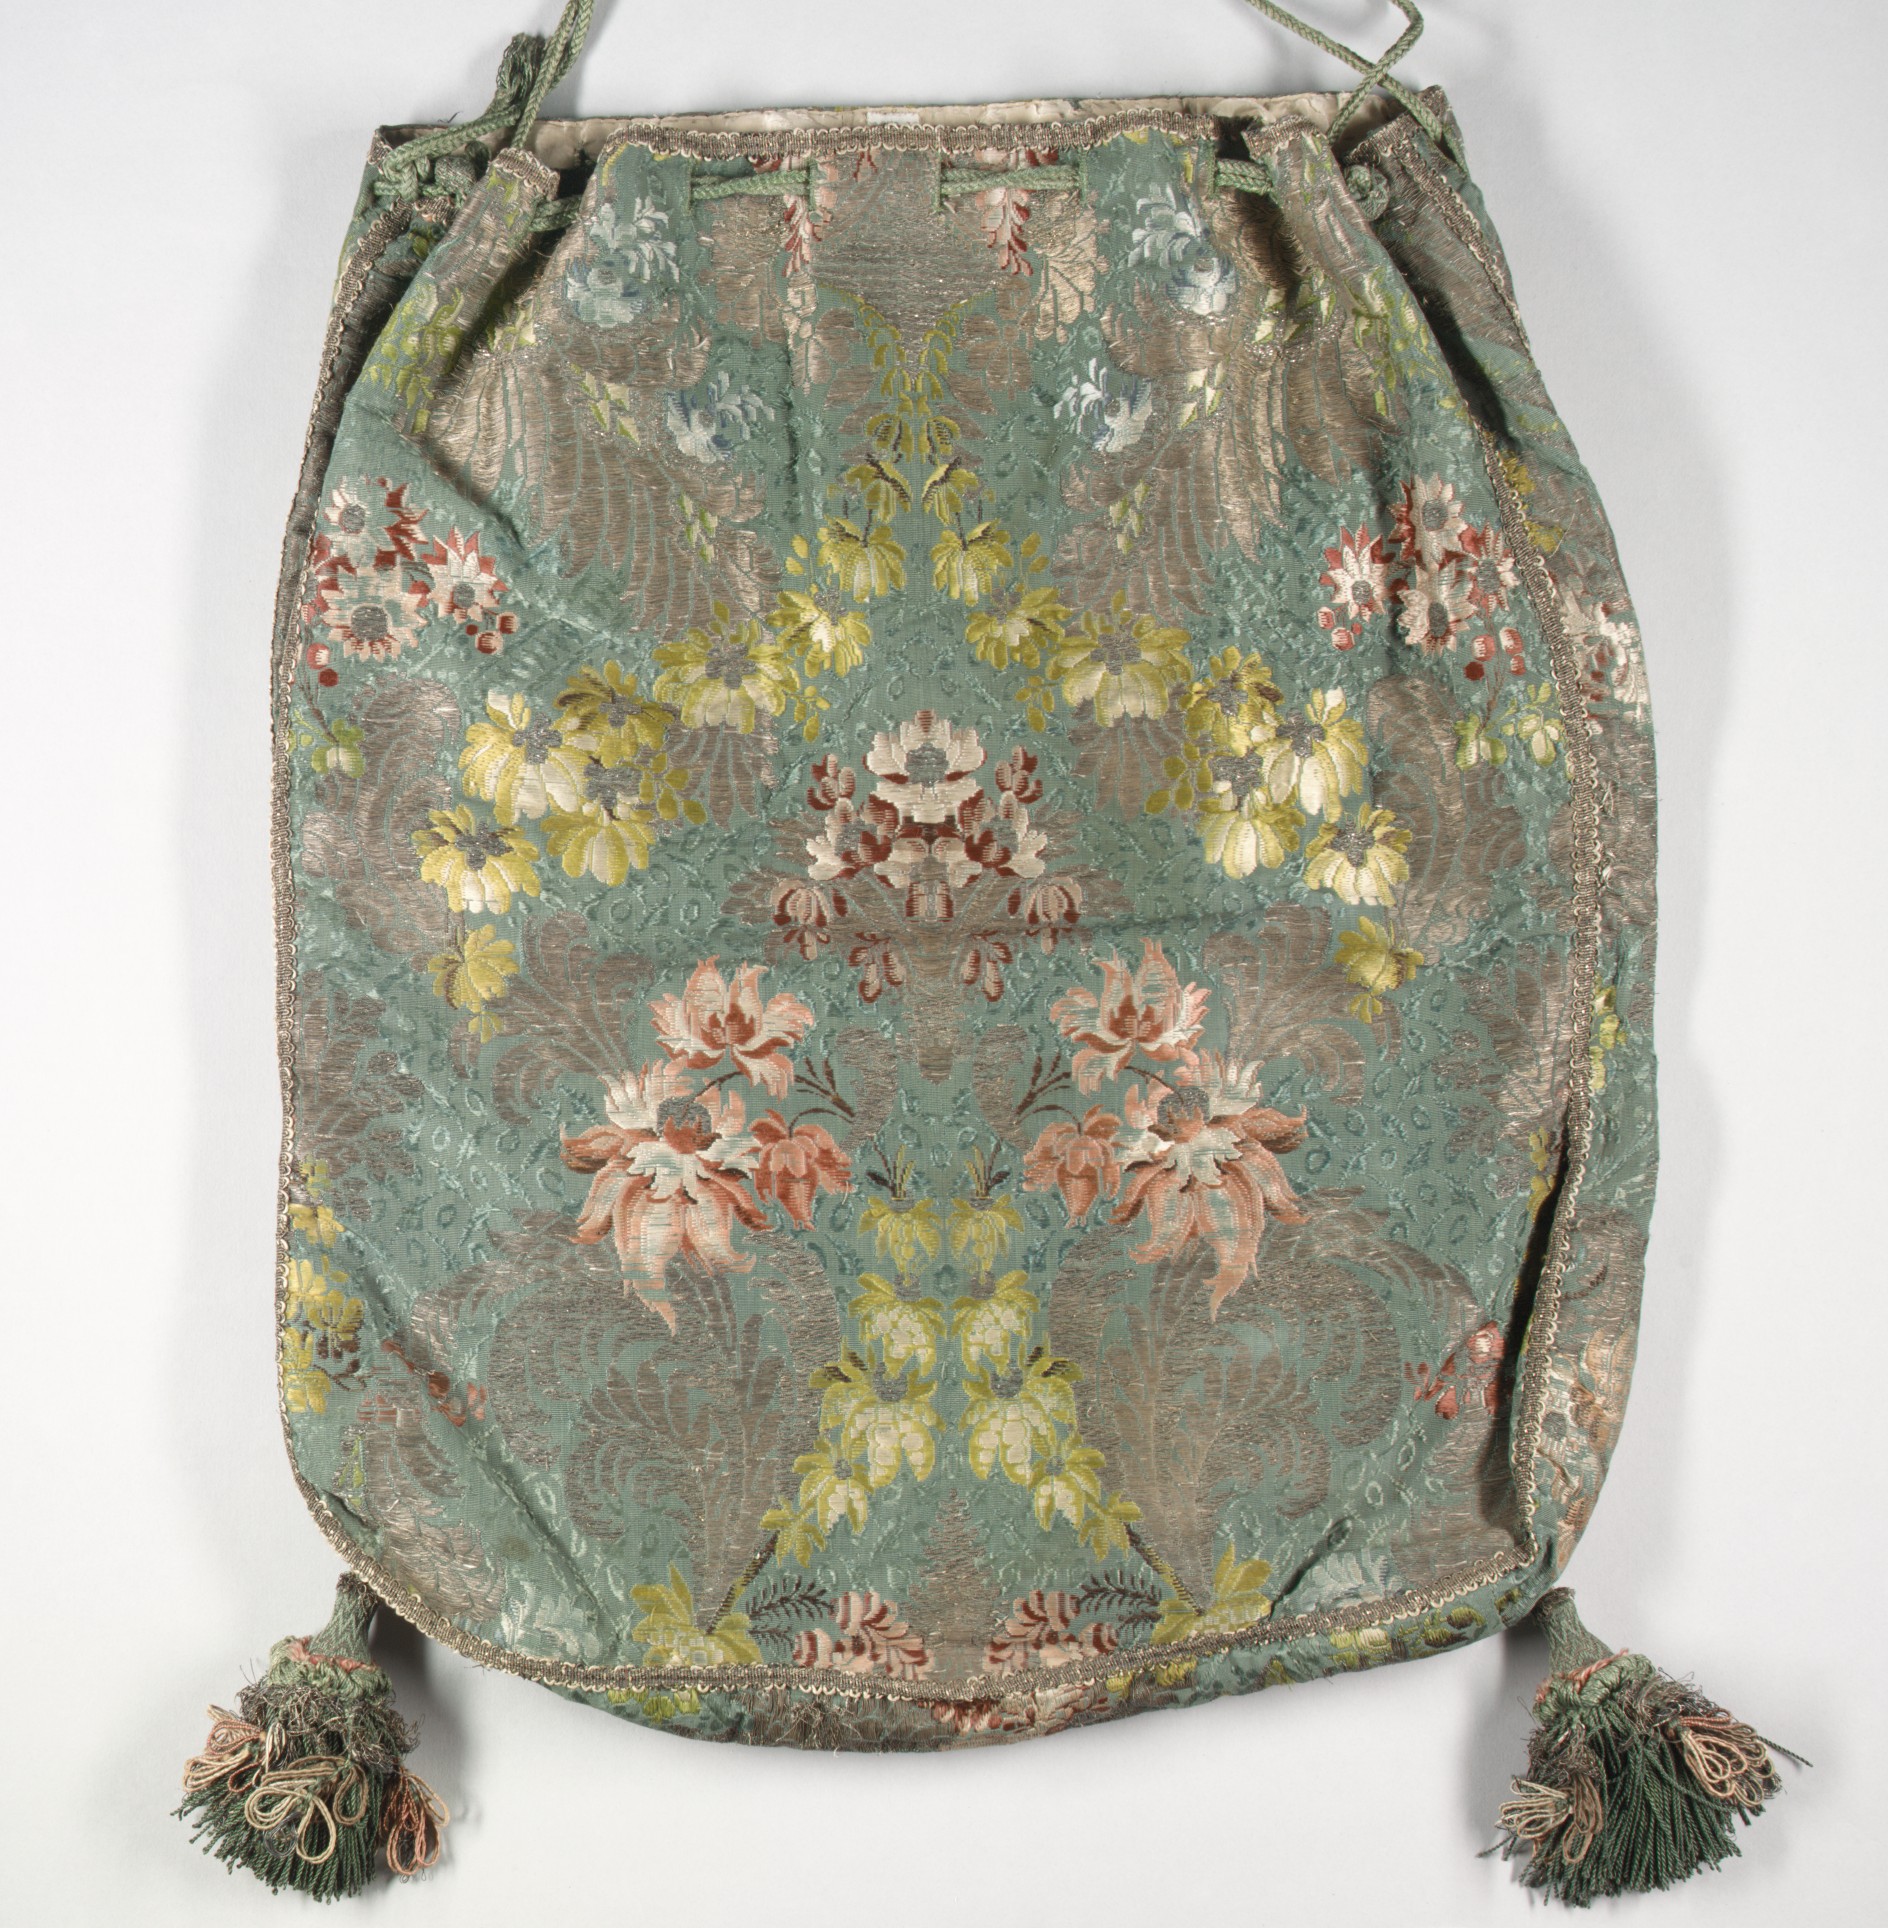 Sewing bag | French | The Metropolitan Museum of Art